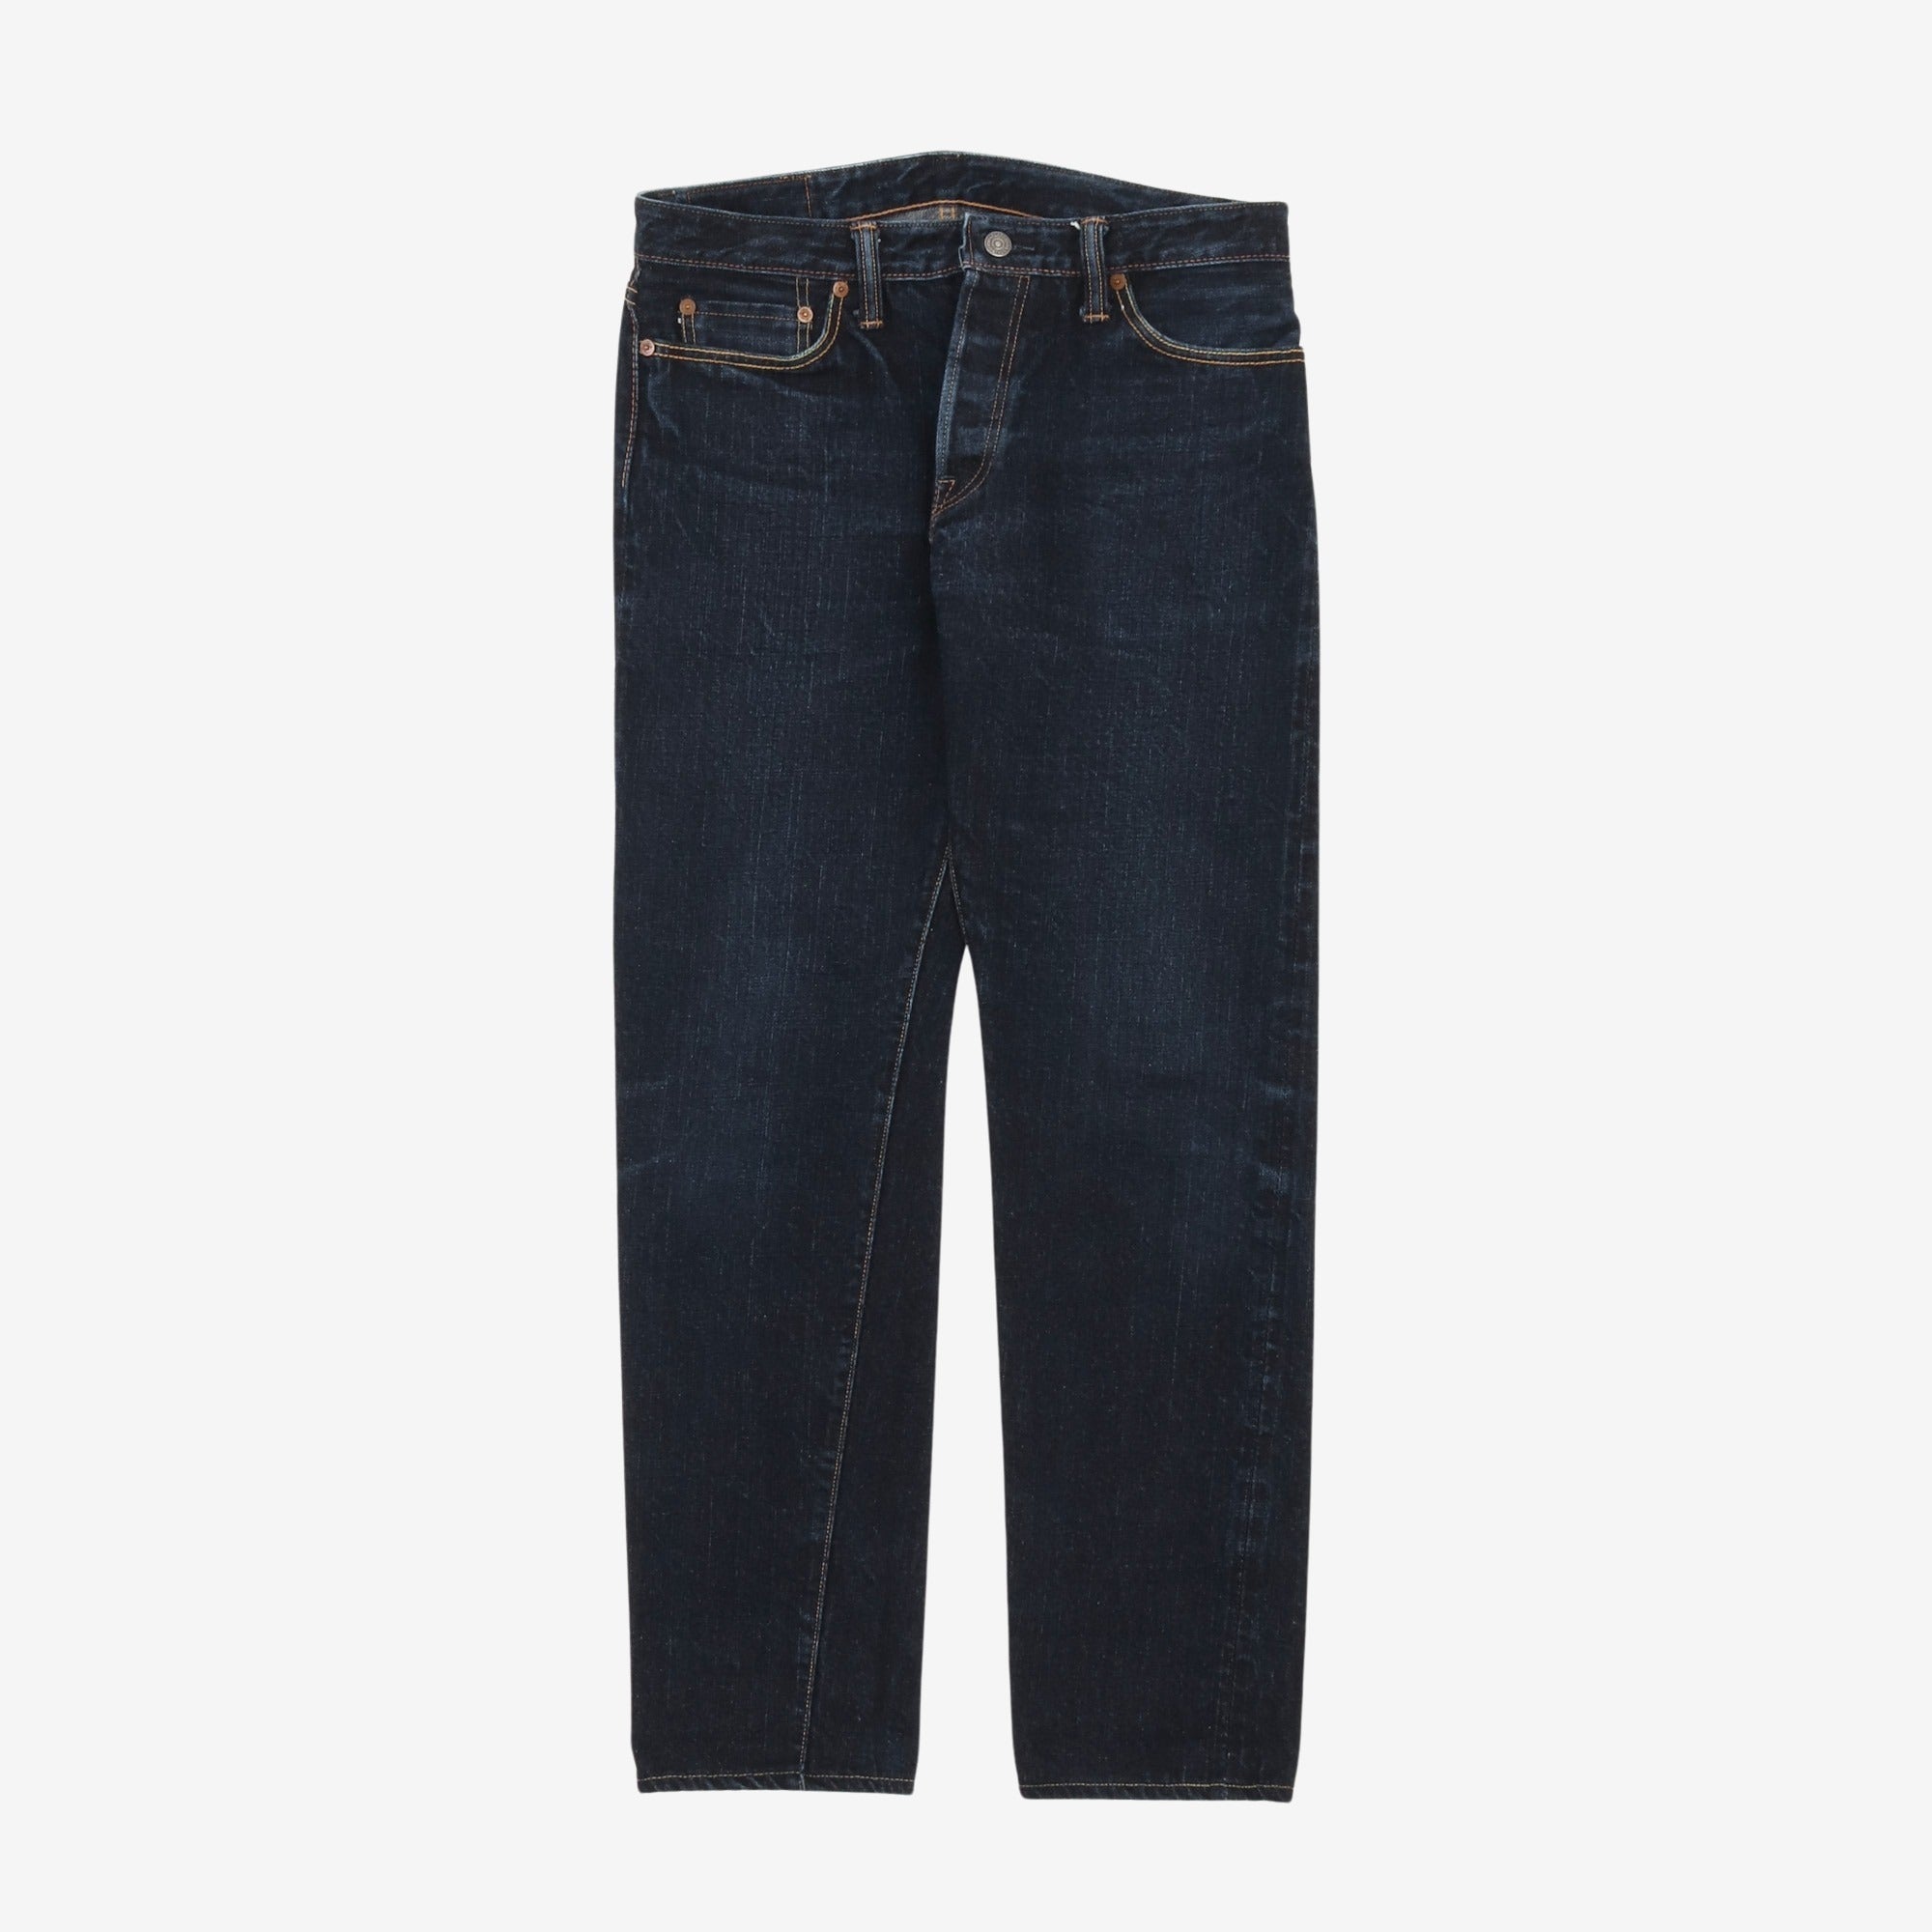 Lot D306 Selvedge Jeans